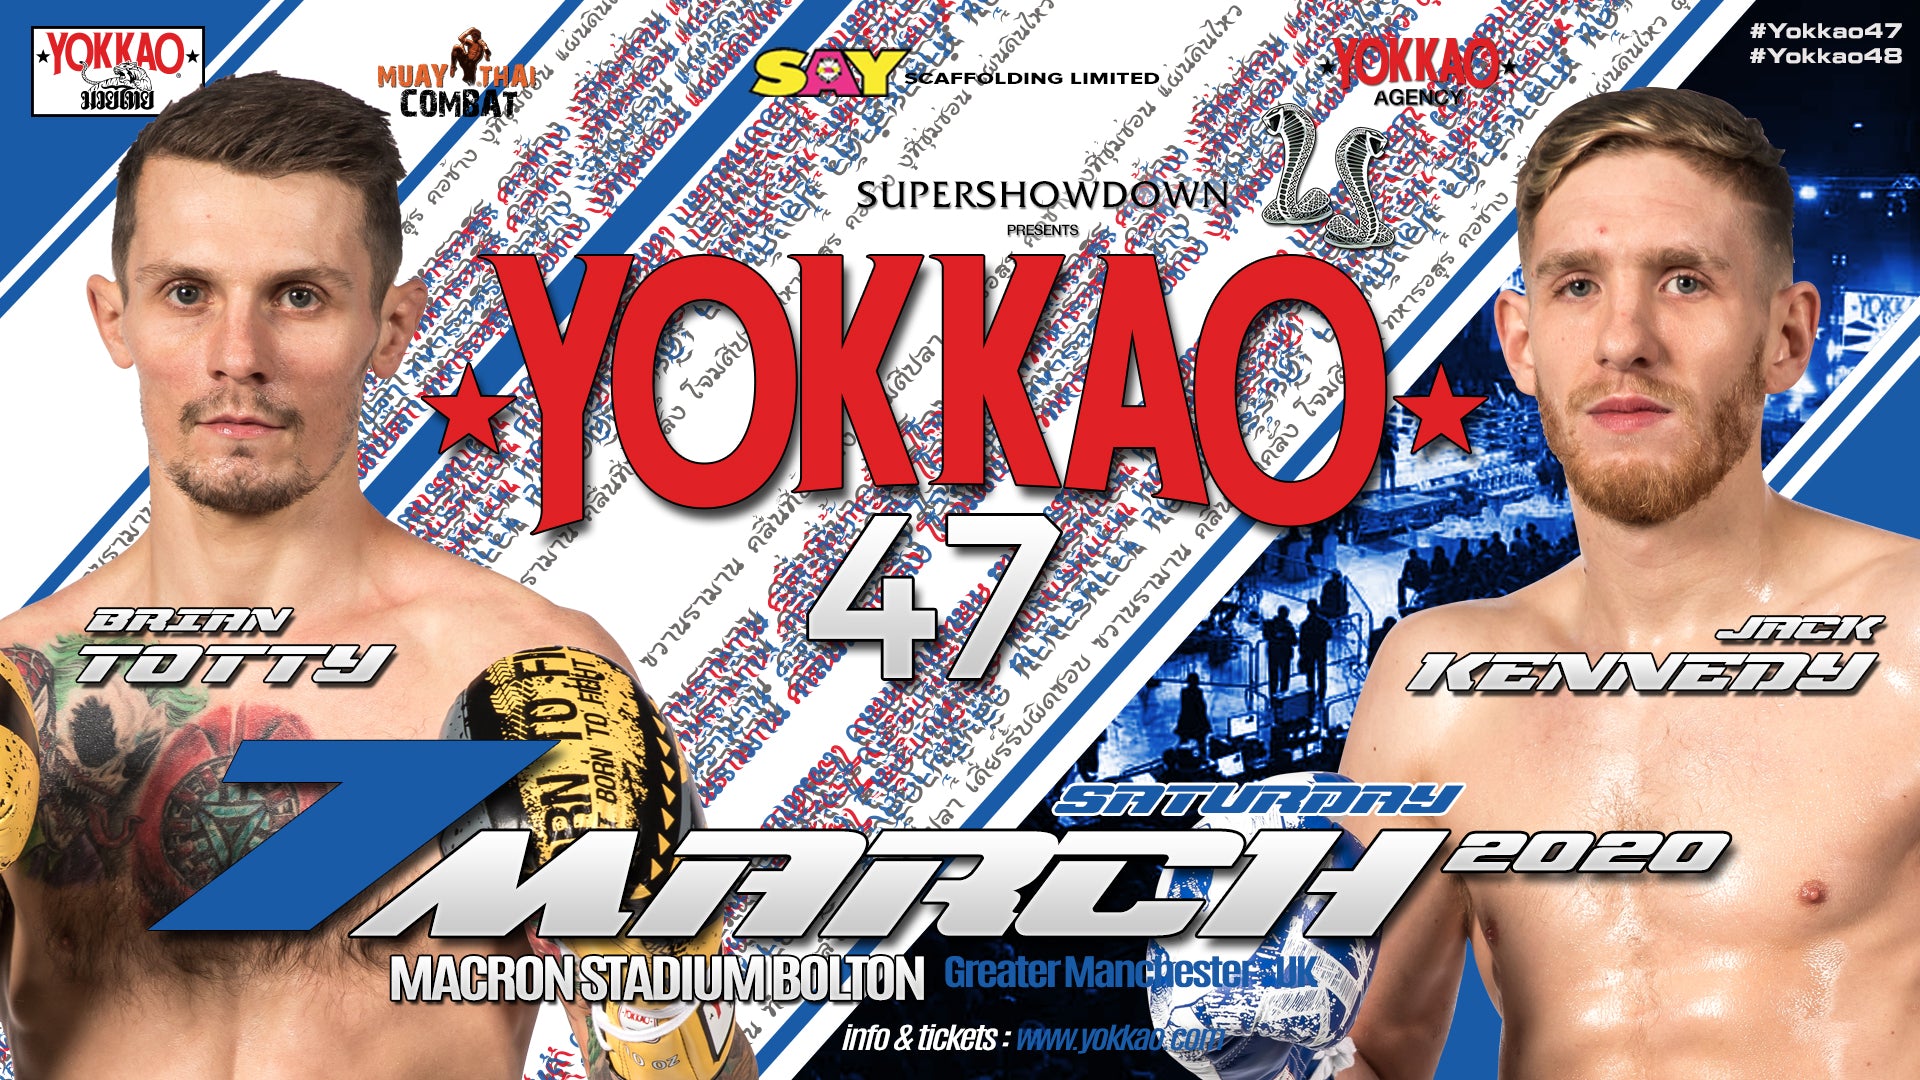 Brian Totty vs Jack Kennedy Rematch at YOKKAO 47